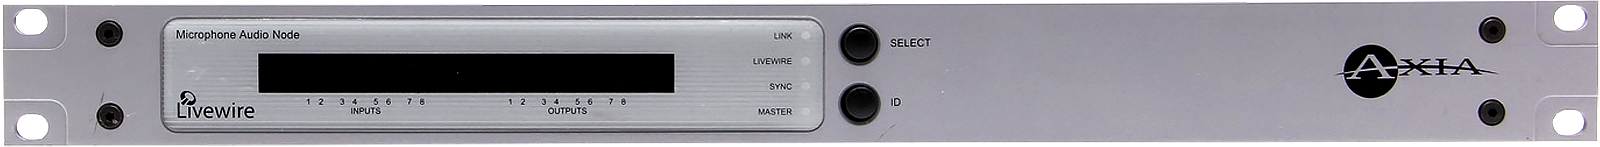 Axia Microphone Node (2001-00136)